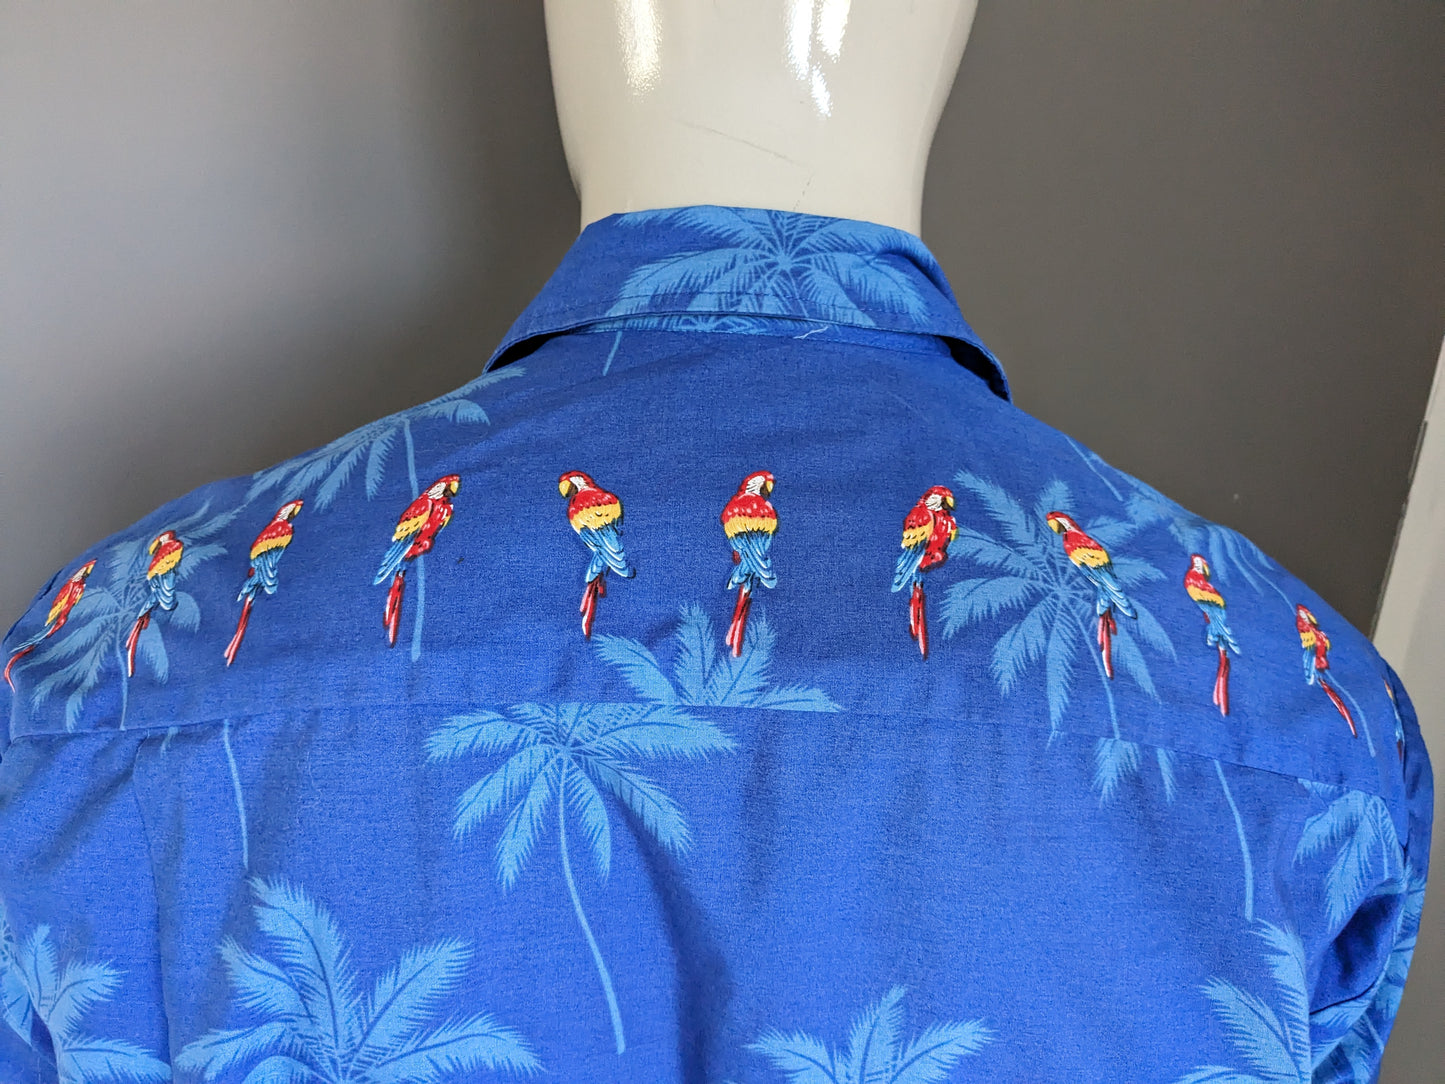 Pacific Legend Hawaii Shirt Short Sleeve. Colored parrot print. Size L.